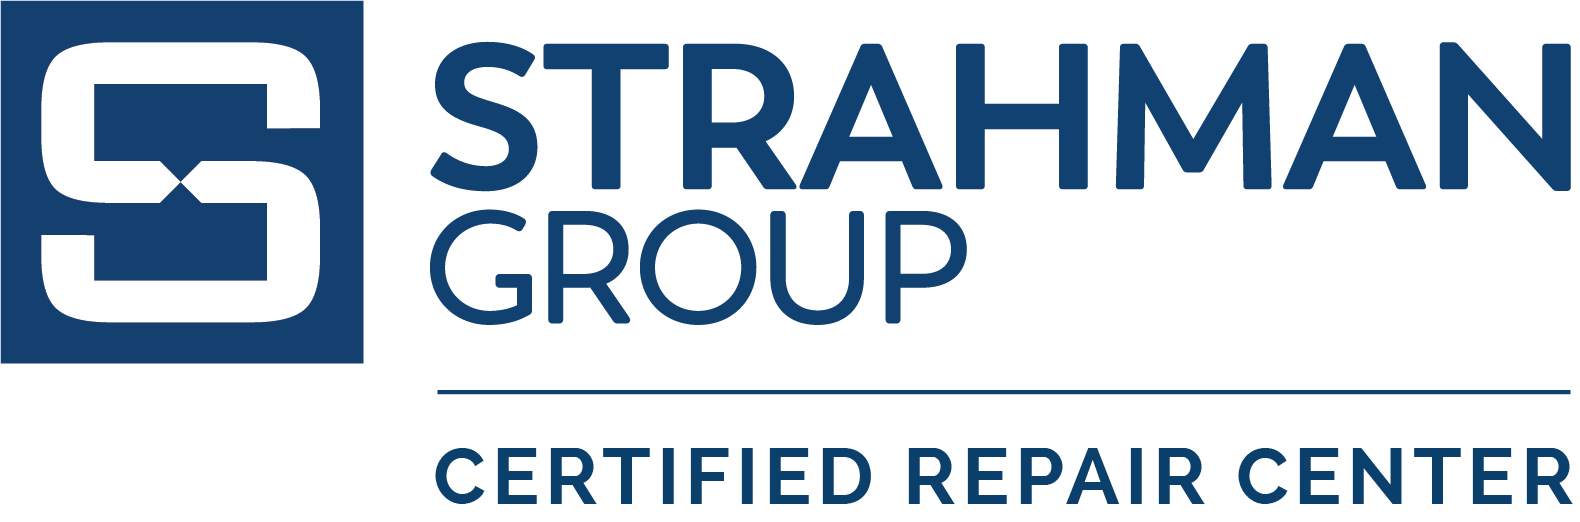 Strahman Certified Repair Center logo